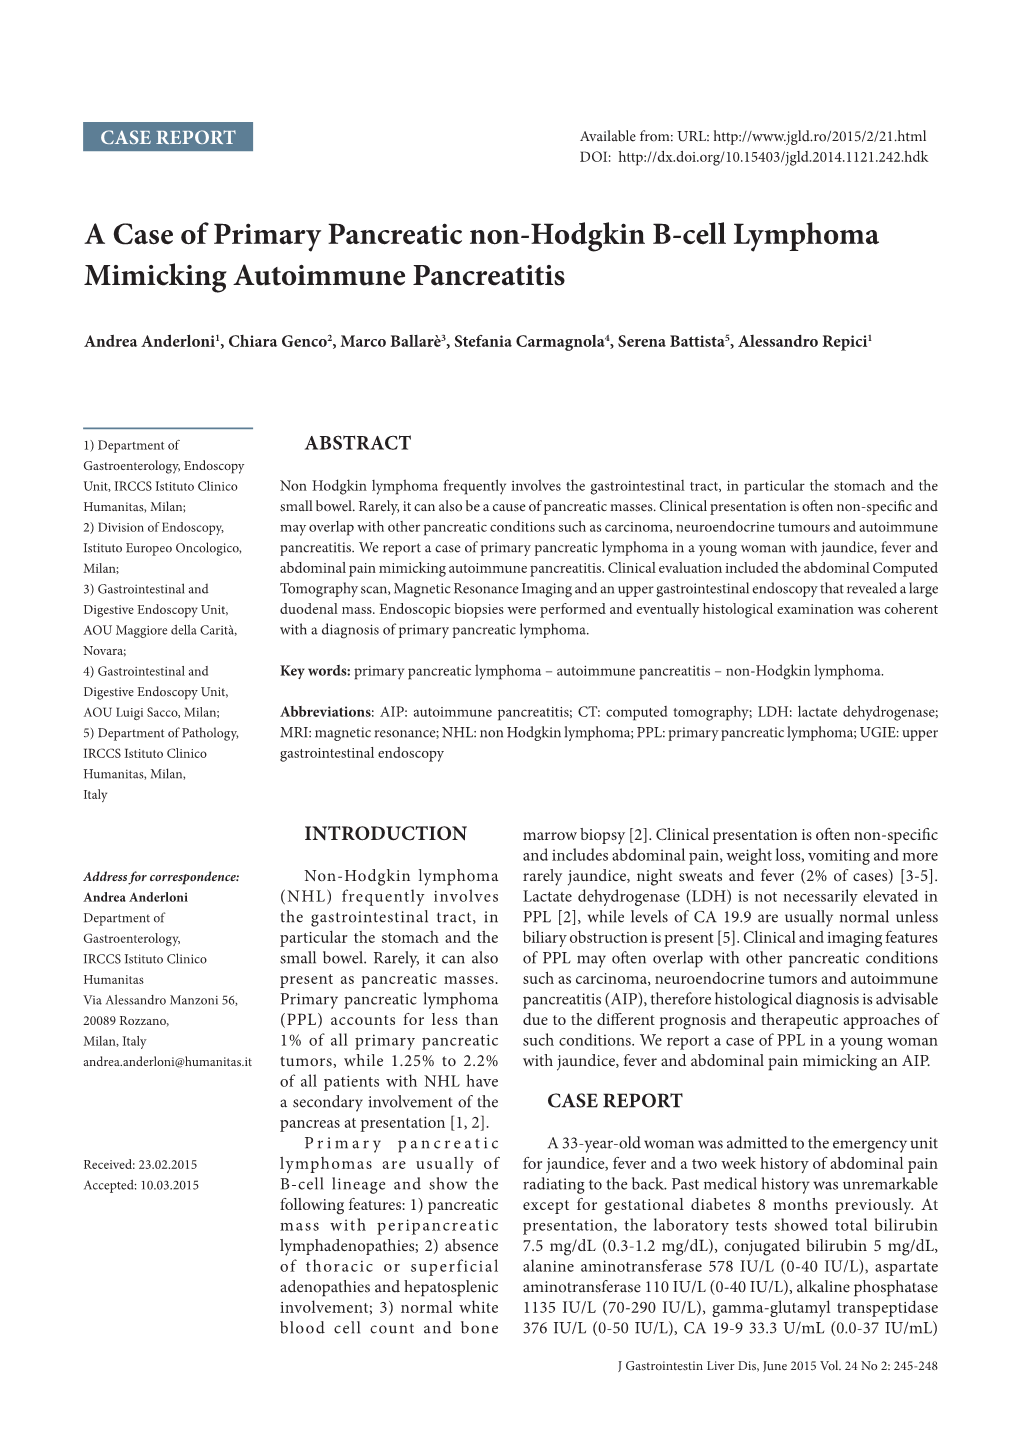 A Case of Primary Pancreatic Non-Hodgkin B-Cell Lymphoma Mimicking Autoimmune Pancreatitis